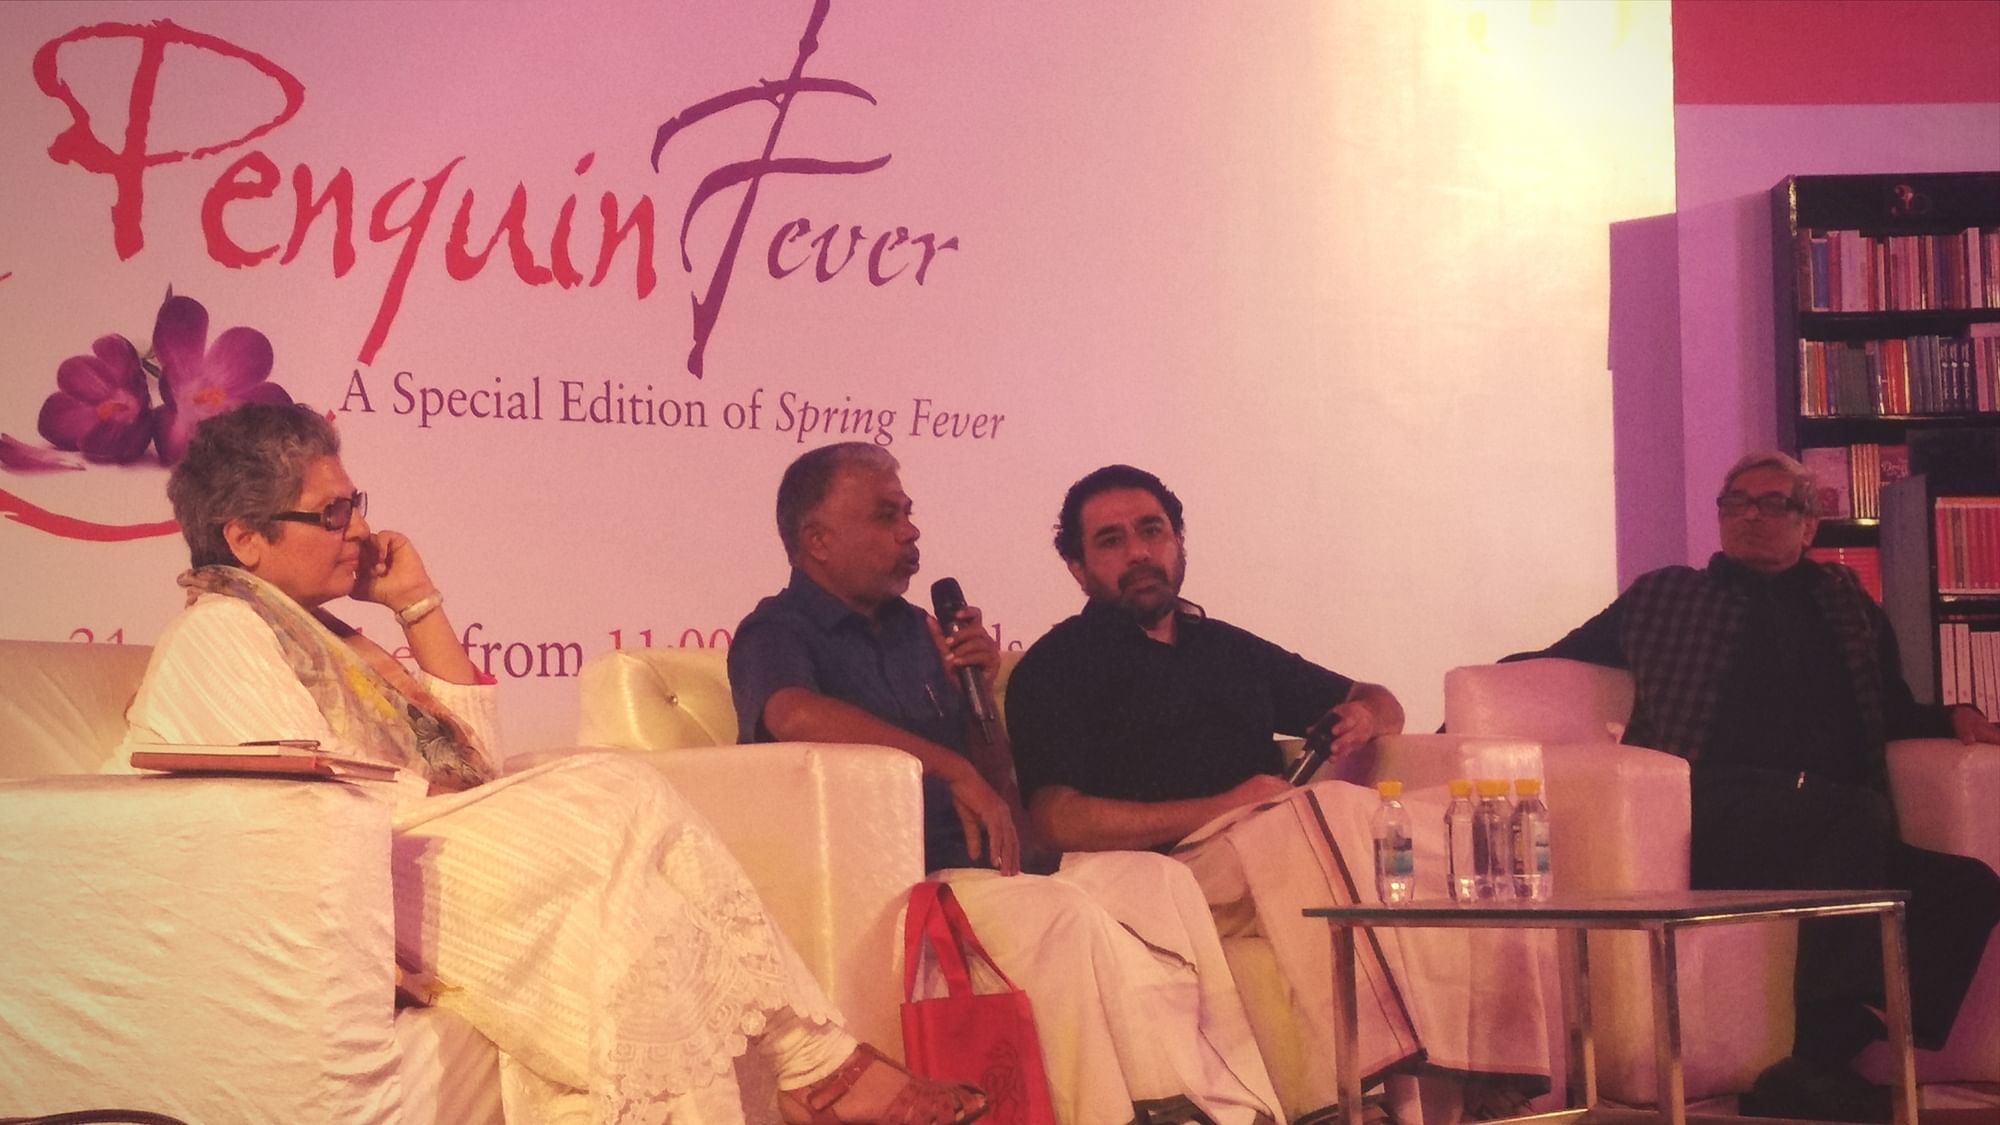 Perumal Murugan, Bibek Debroy, Rana Safvi and Kannan Sundaram discussed translations, in a riveting session moderated by author Namita Gokhale.